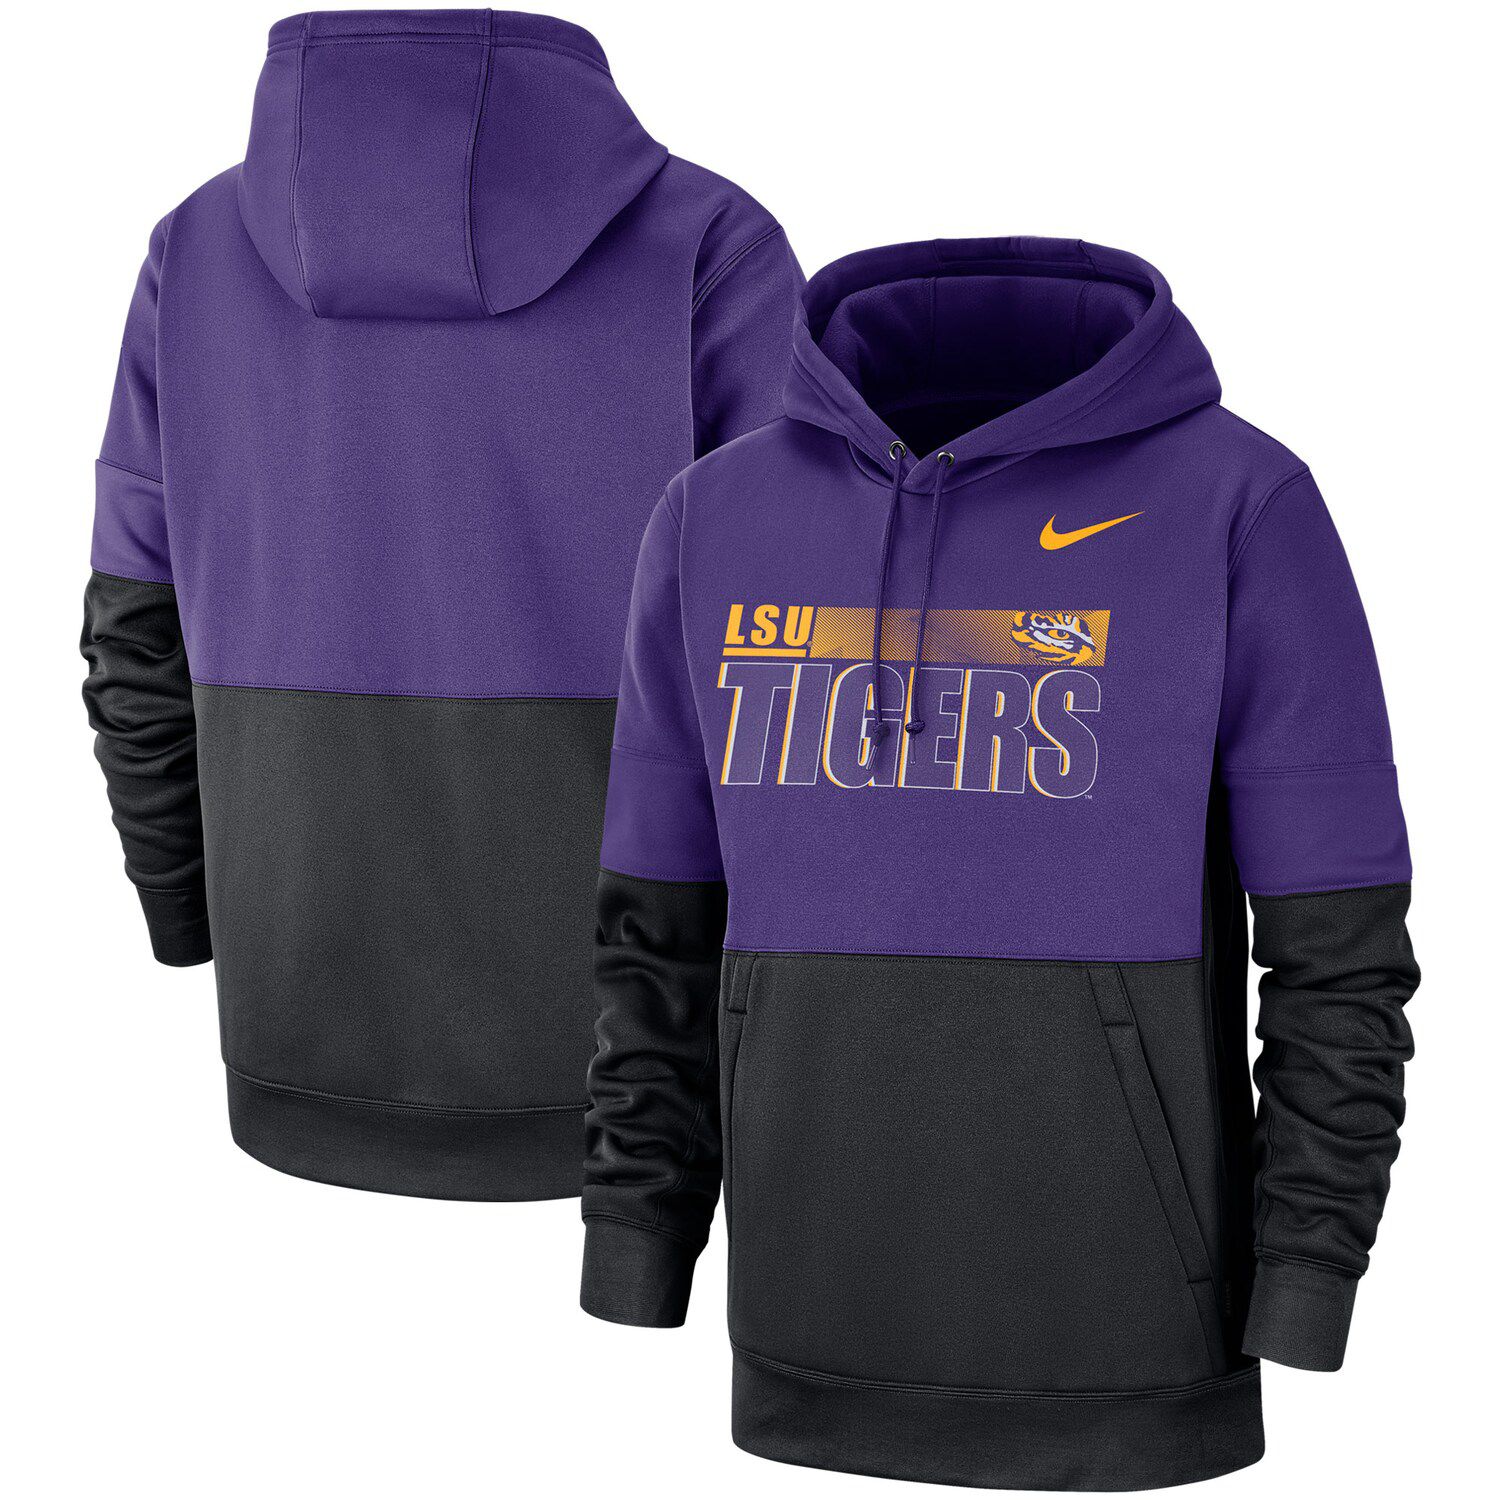 Men's Nike Purple/Black LSU Tigers 